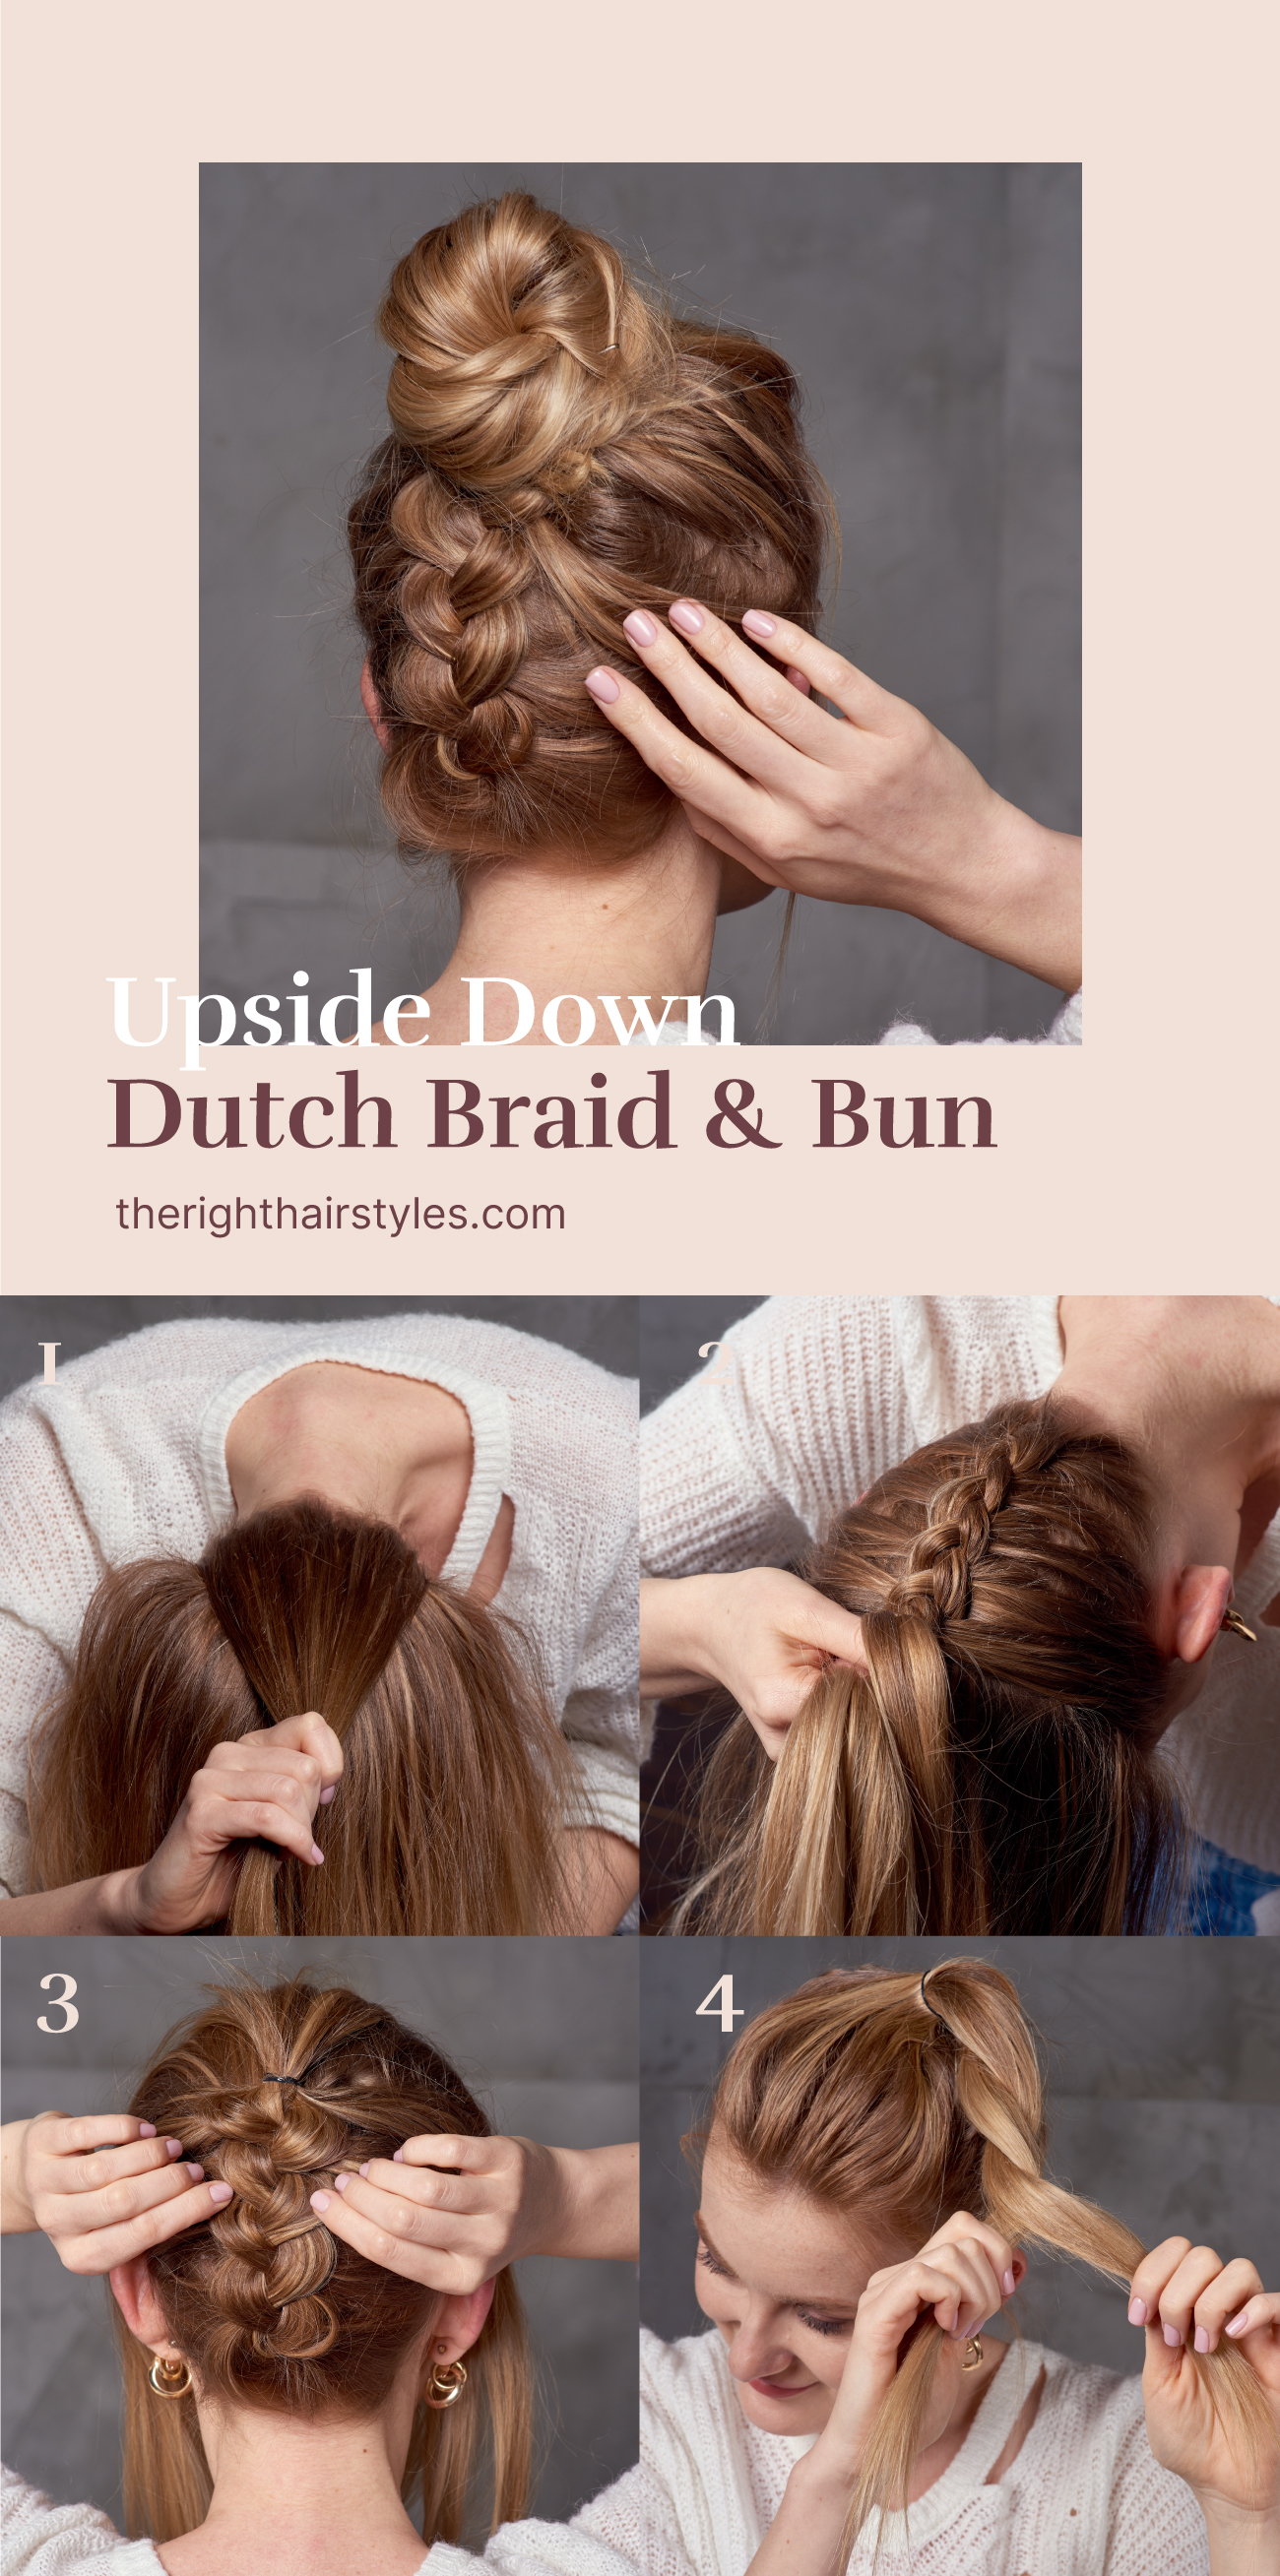 Upside Down Dutch Braid into a Bun Step by Step Tutorial